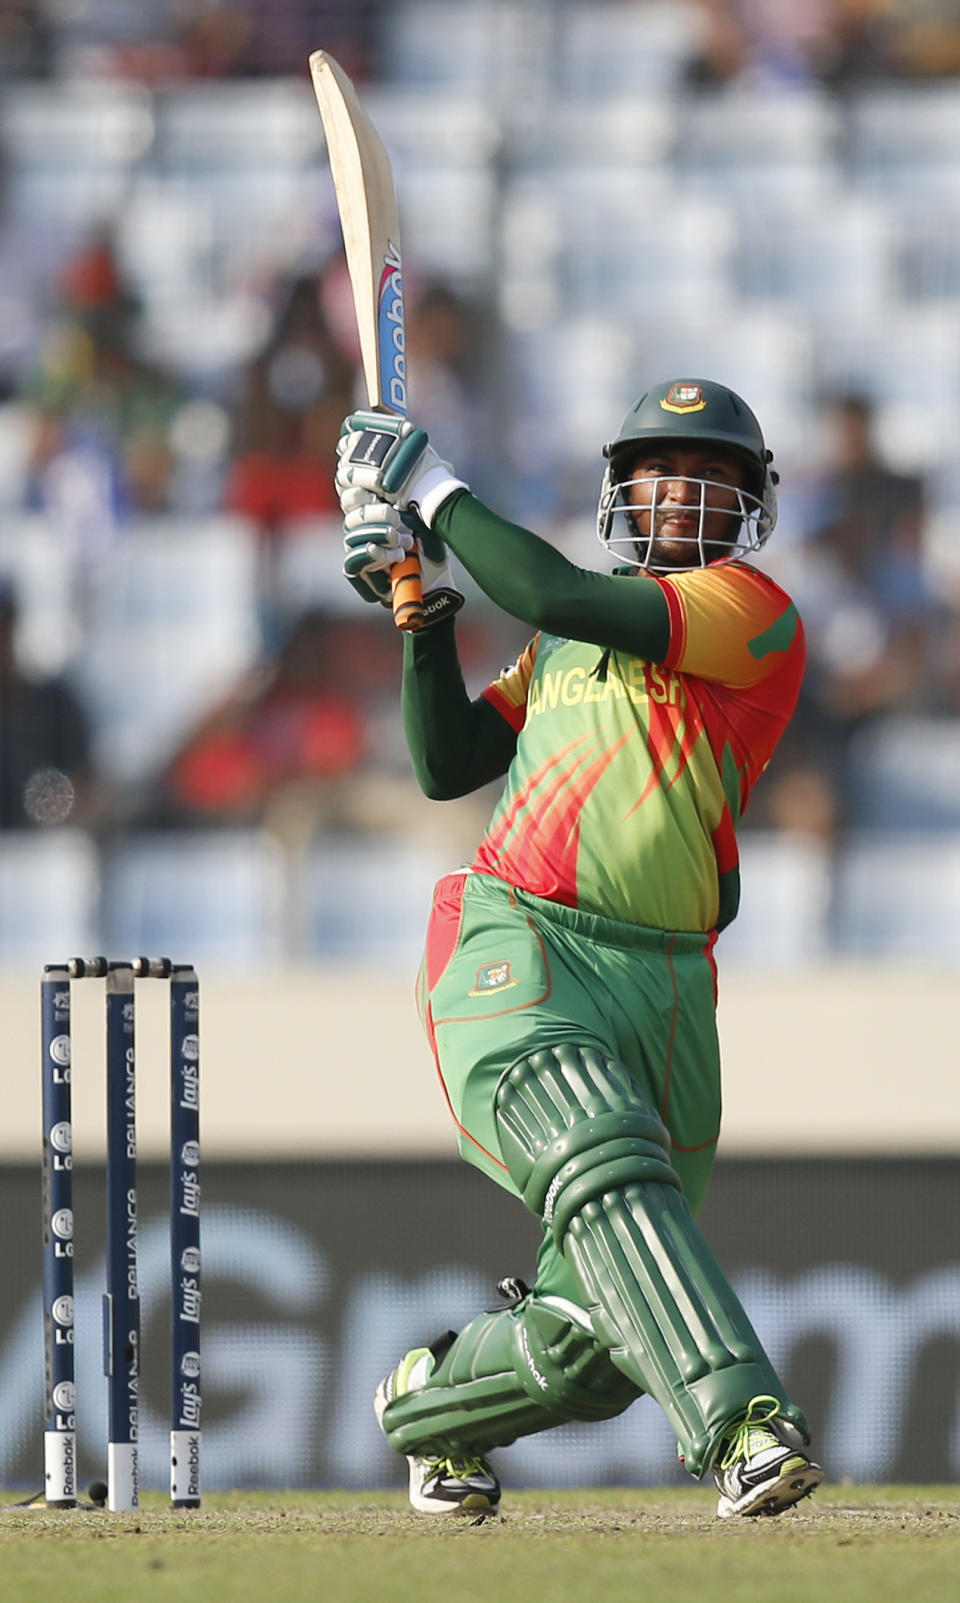 Bangladeshi batsman Shakib Al Hasan plays a shot during their ICC Twenty20 Cricket World Cup match against Australia in Dhaka, Bangladesh, Tuesday, April 1, 2014. (AP Photo/Aijaz Rahi)